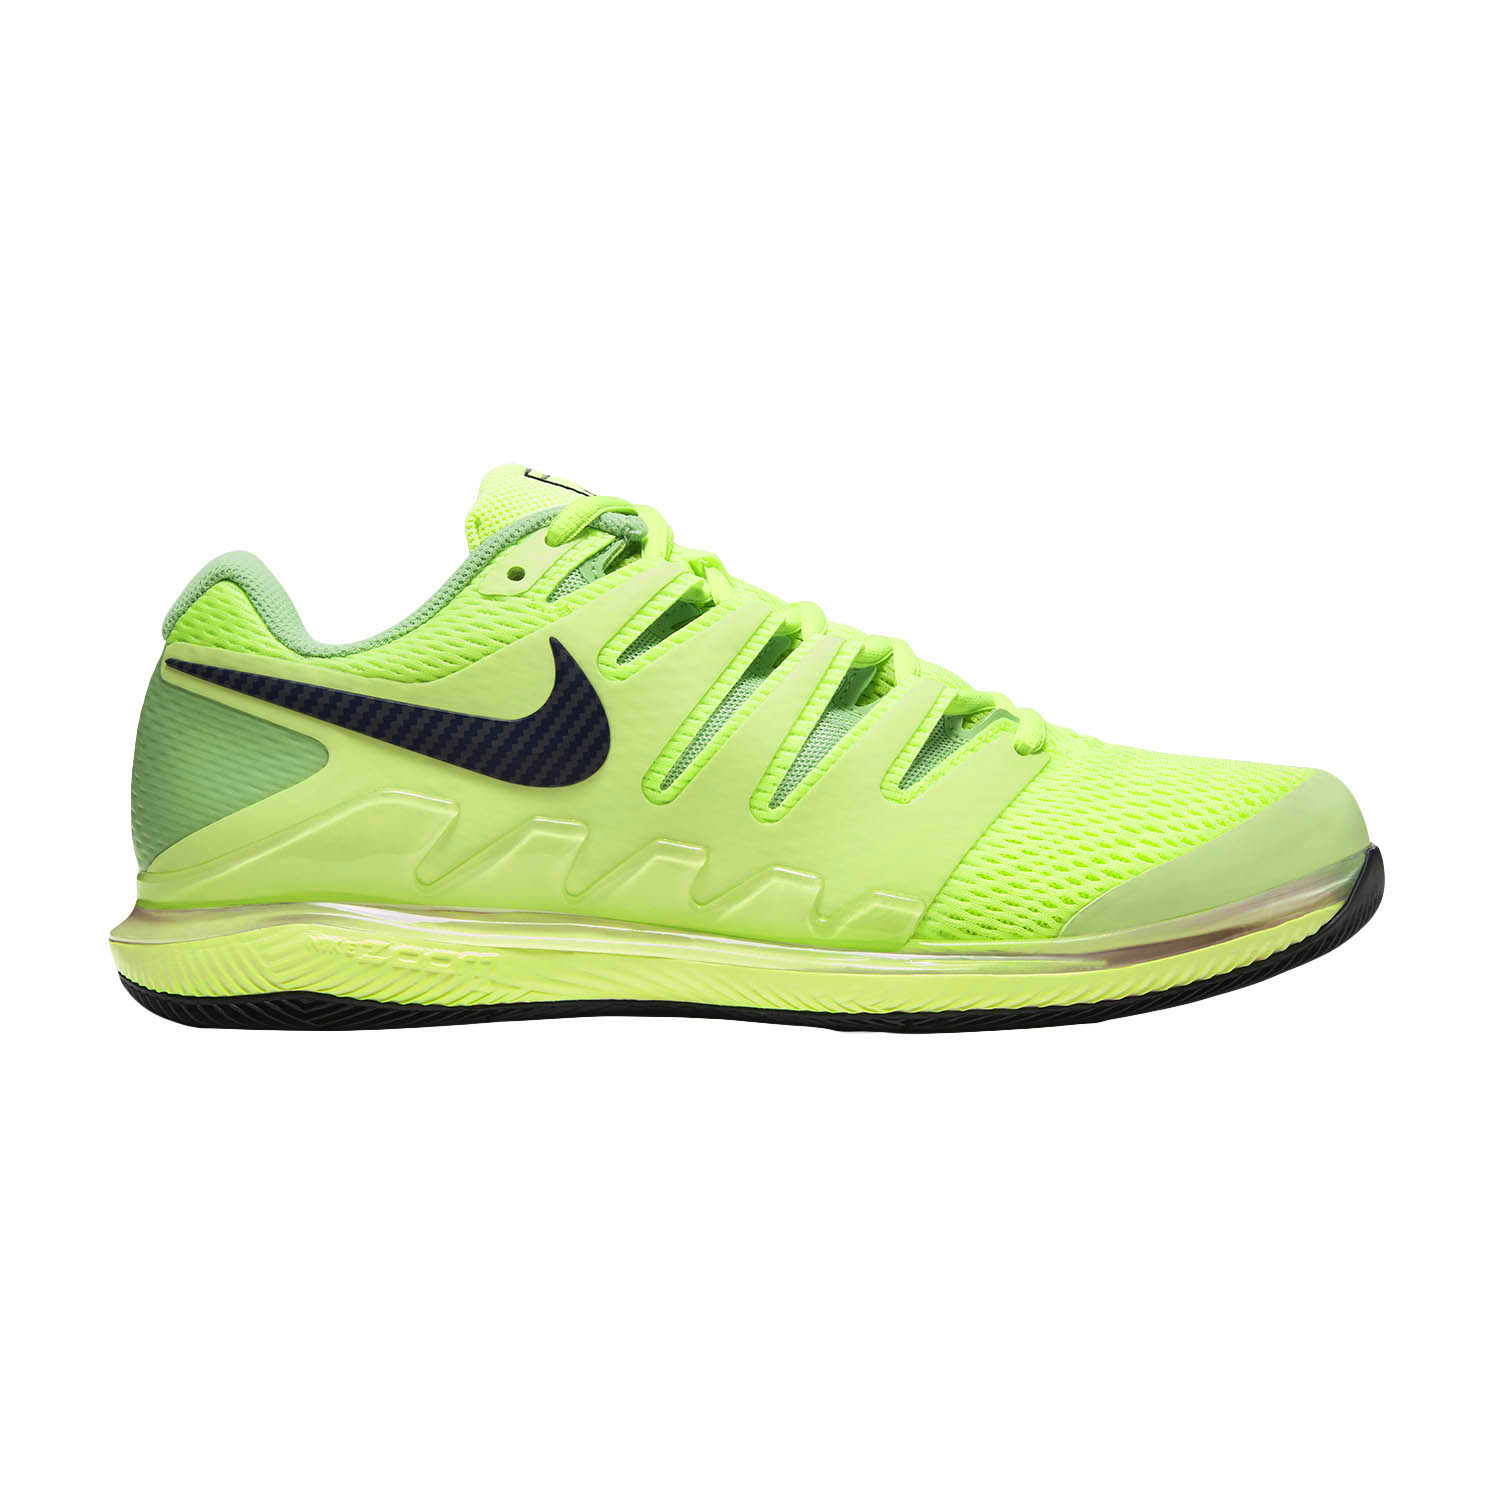 green mens tennis shoes